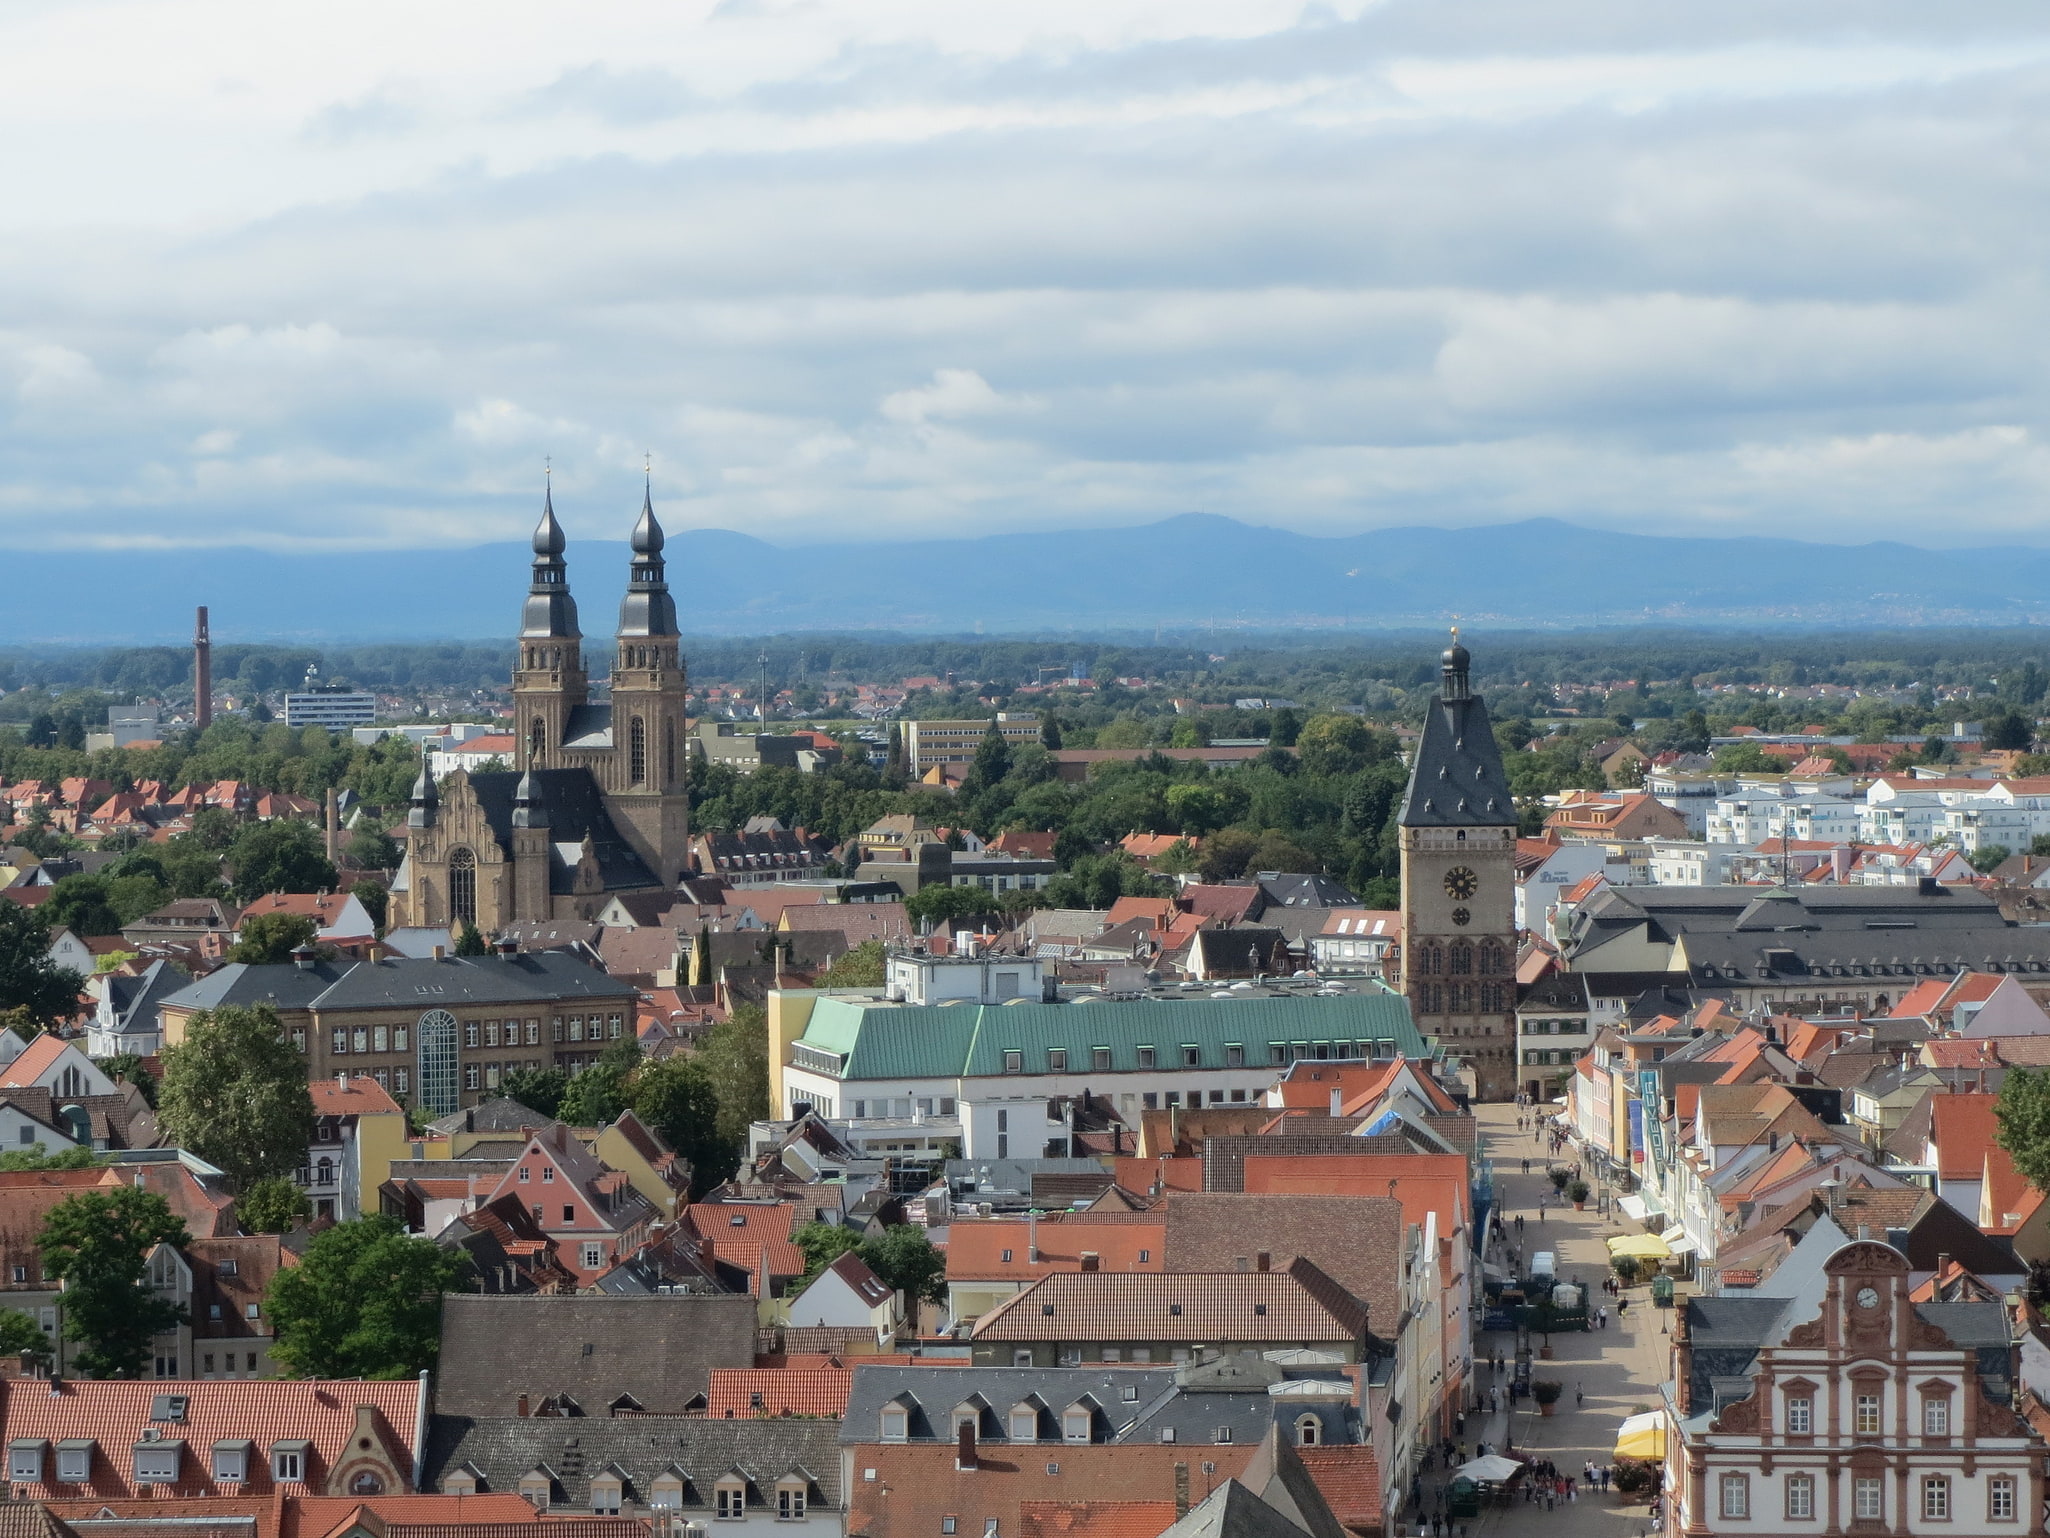 Speyer, Germany